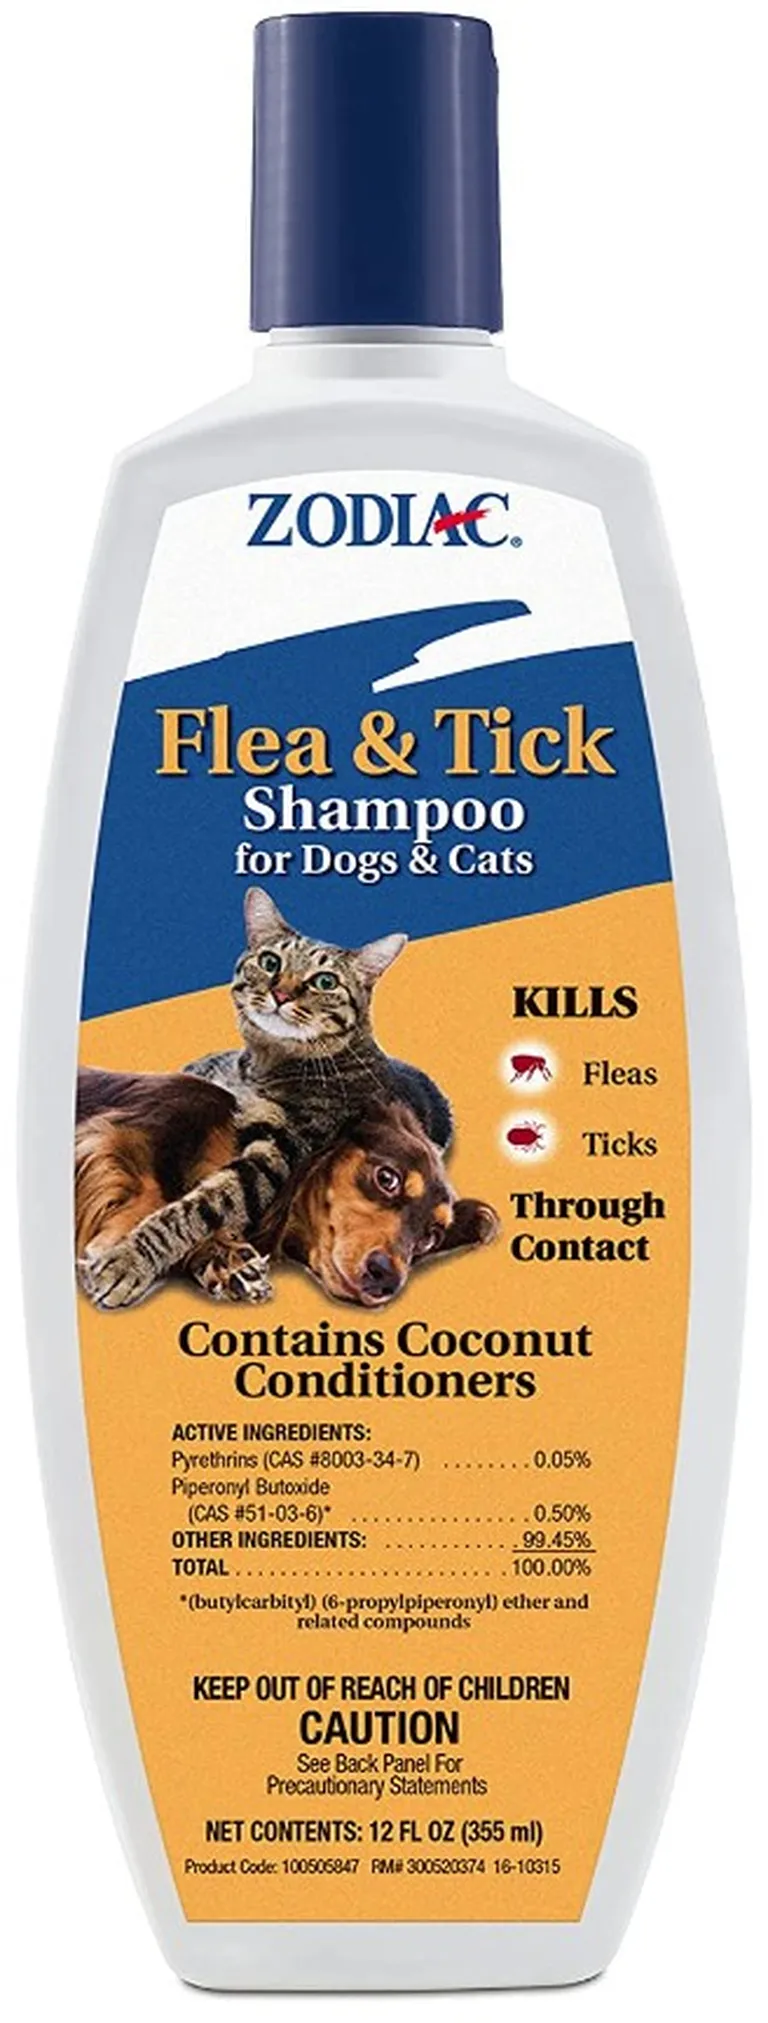 Zodiac Flea and Tick Shampoo for Dogs and Cats Photo 1